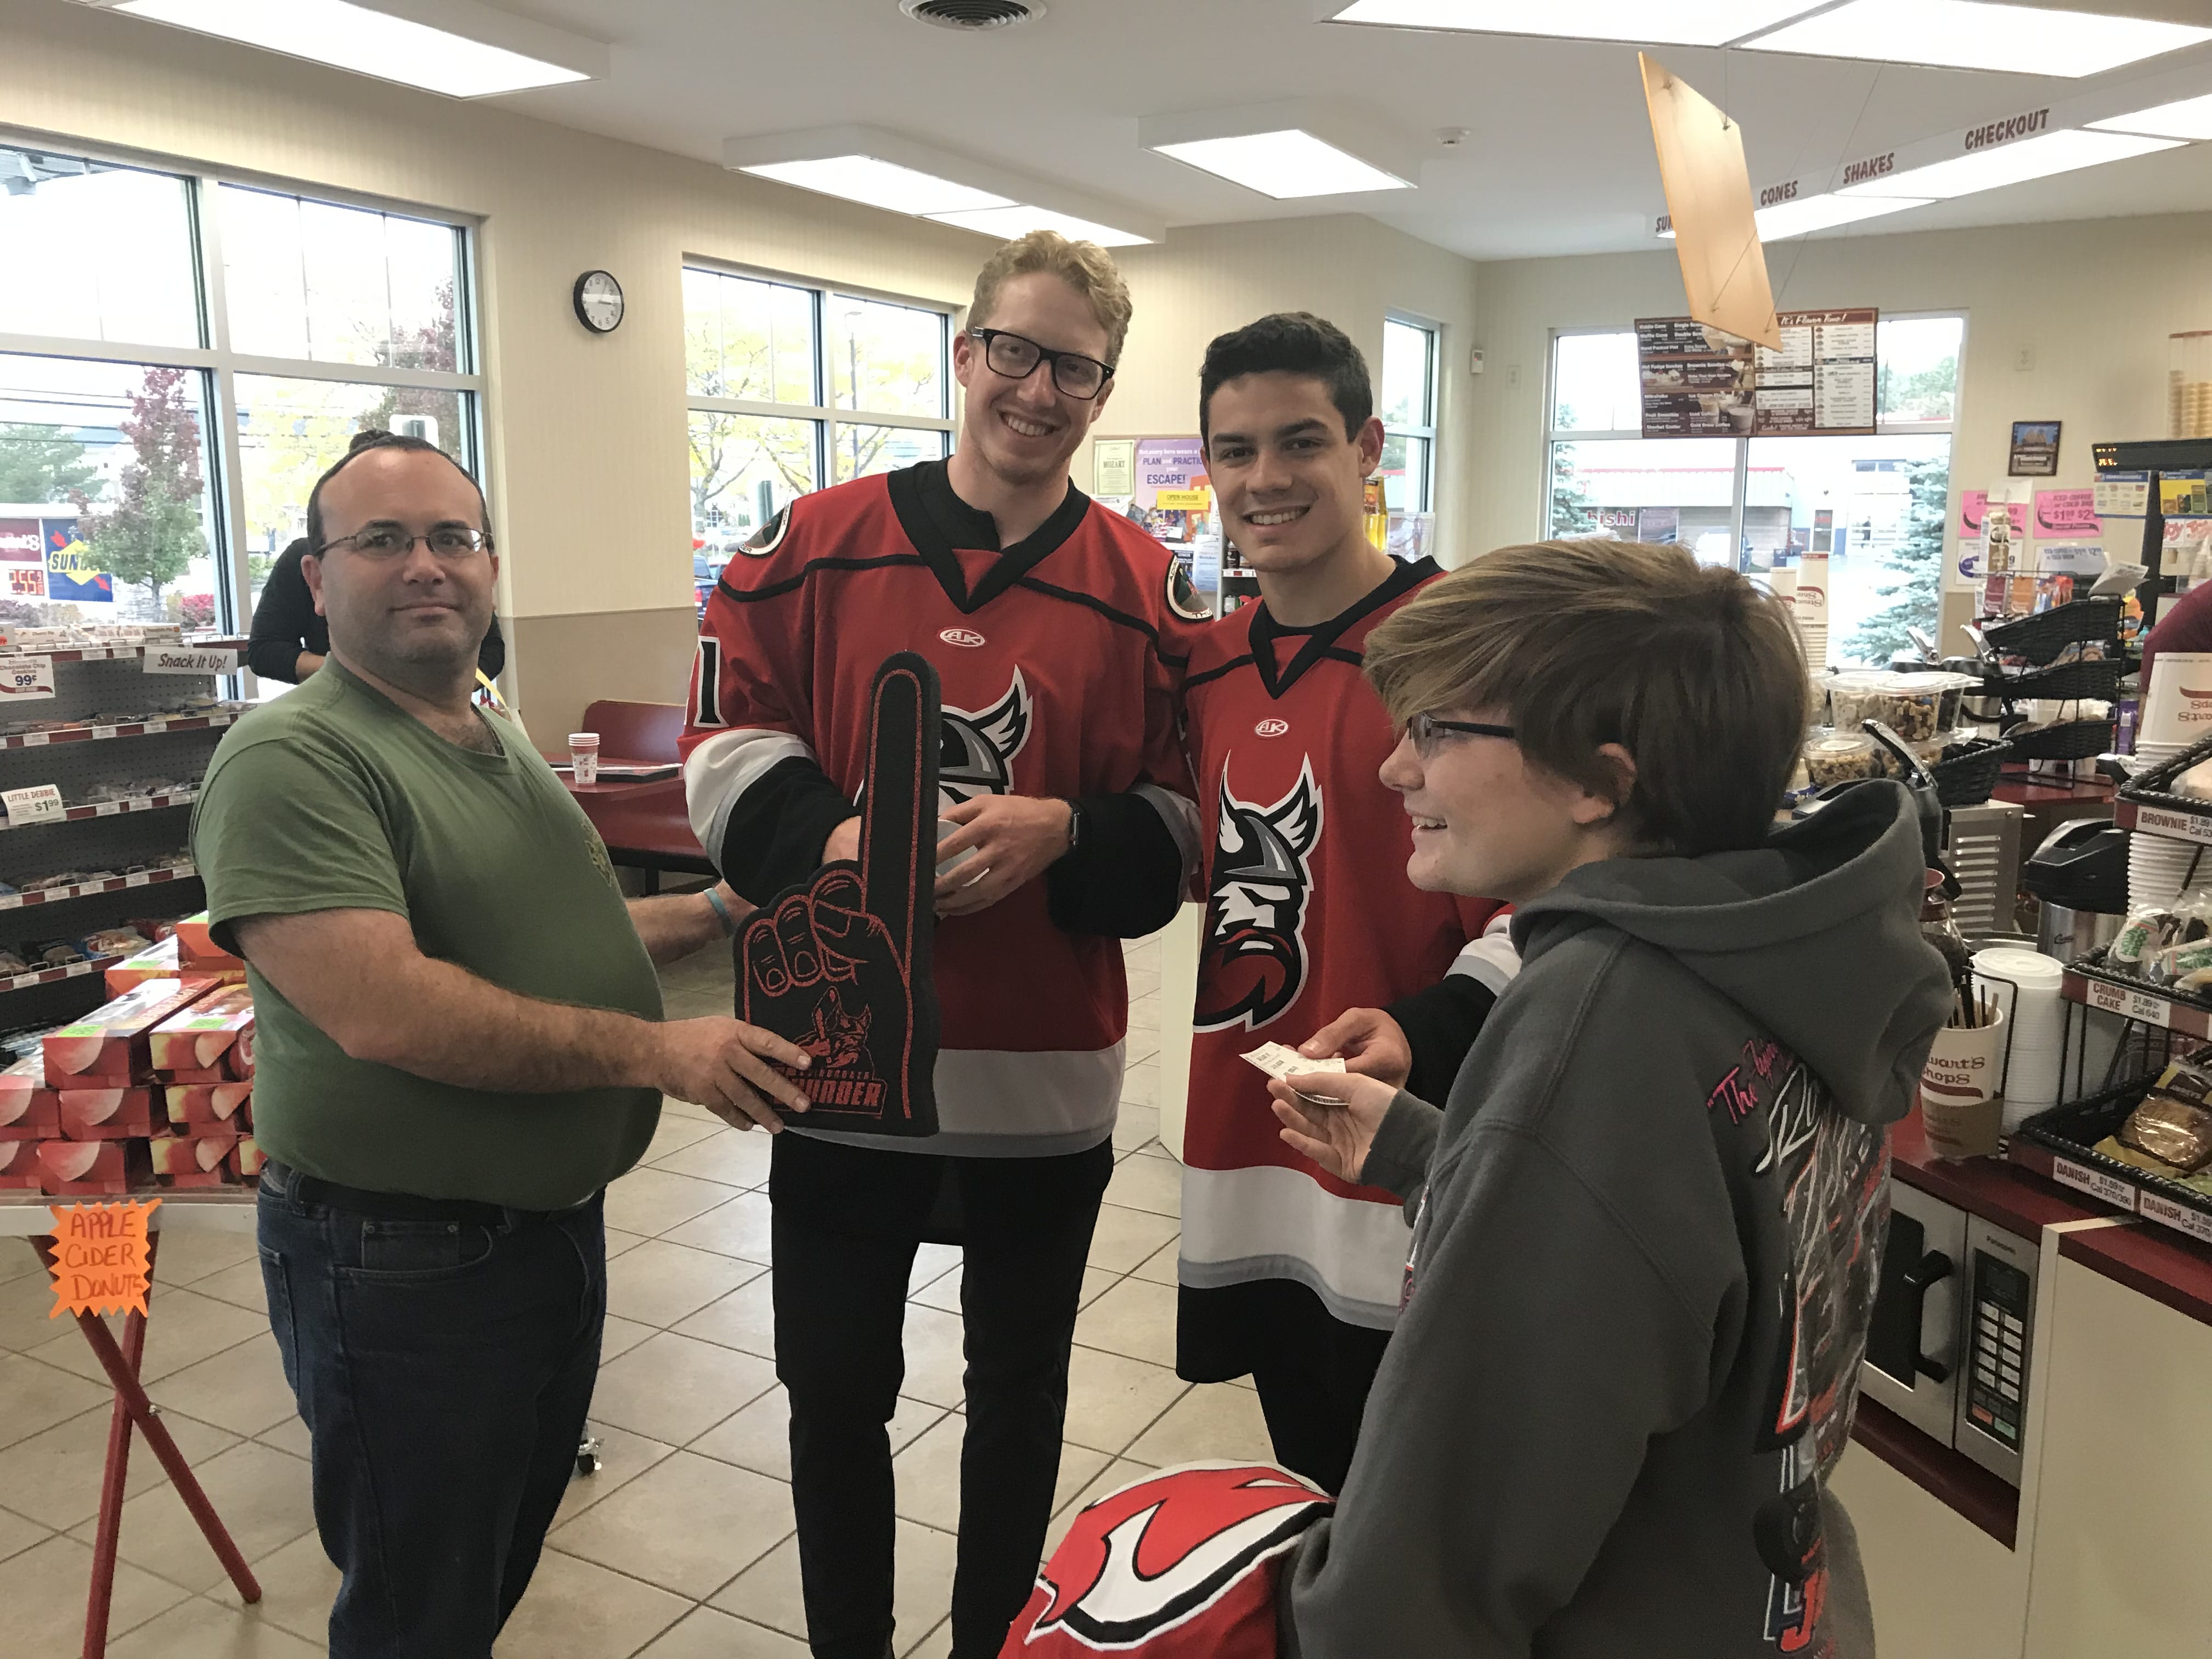 hockey players and stewarts customers